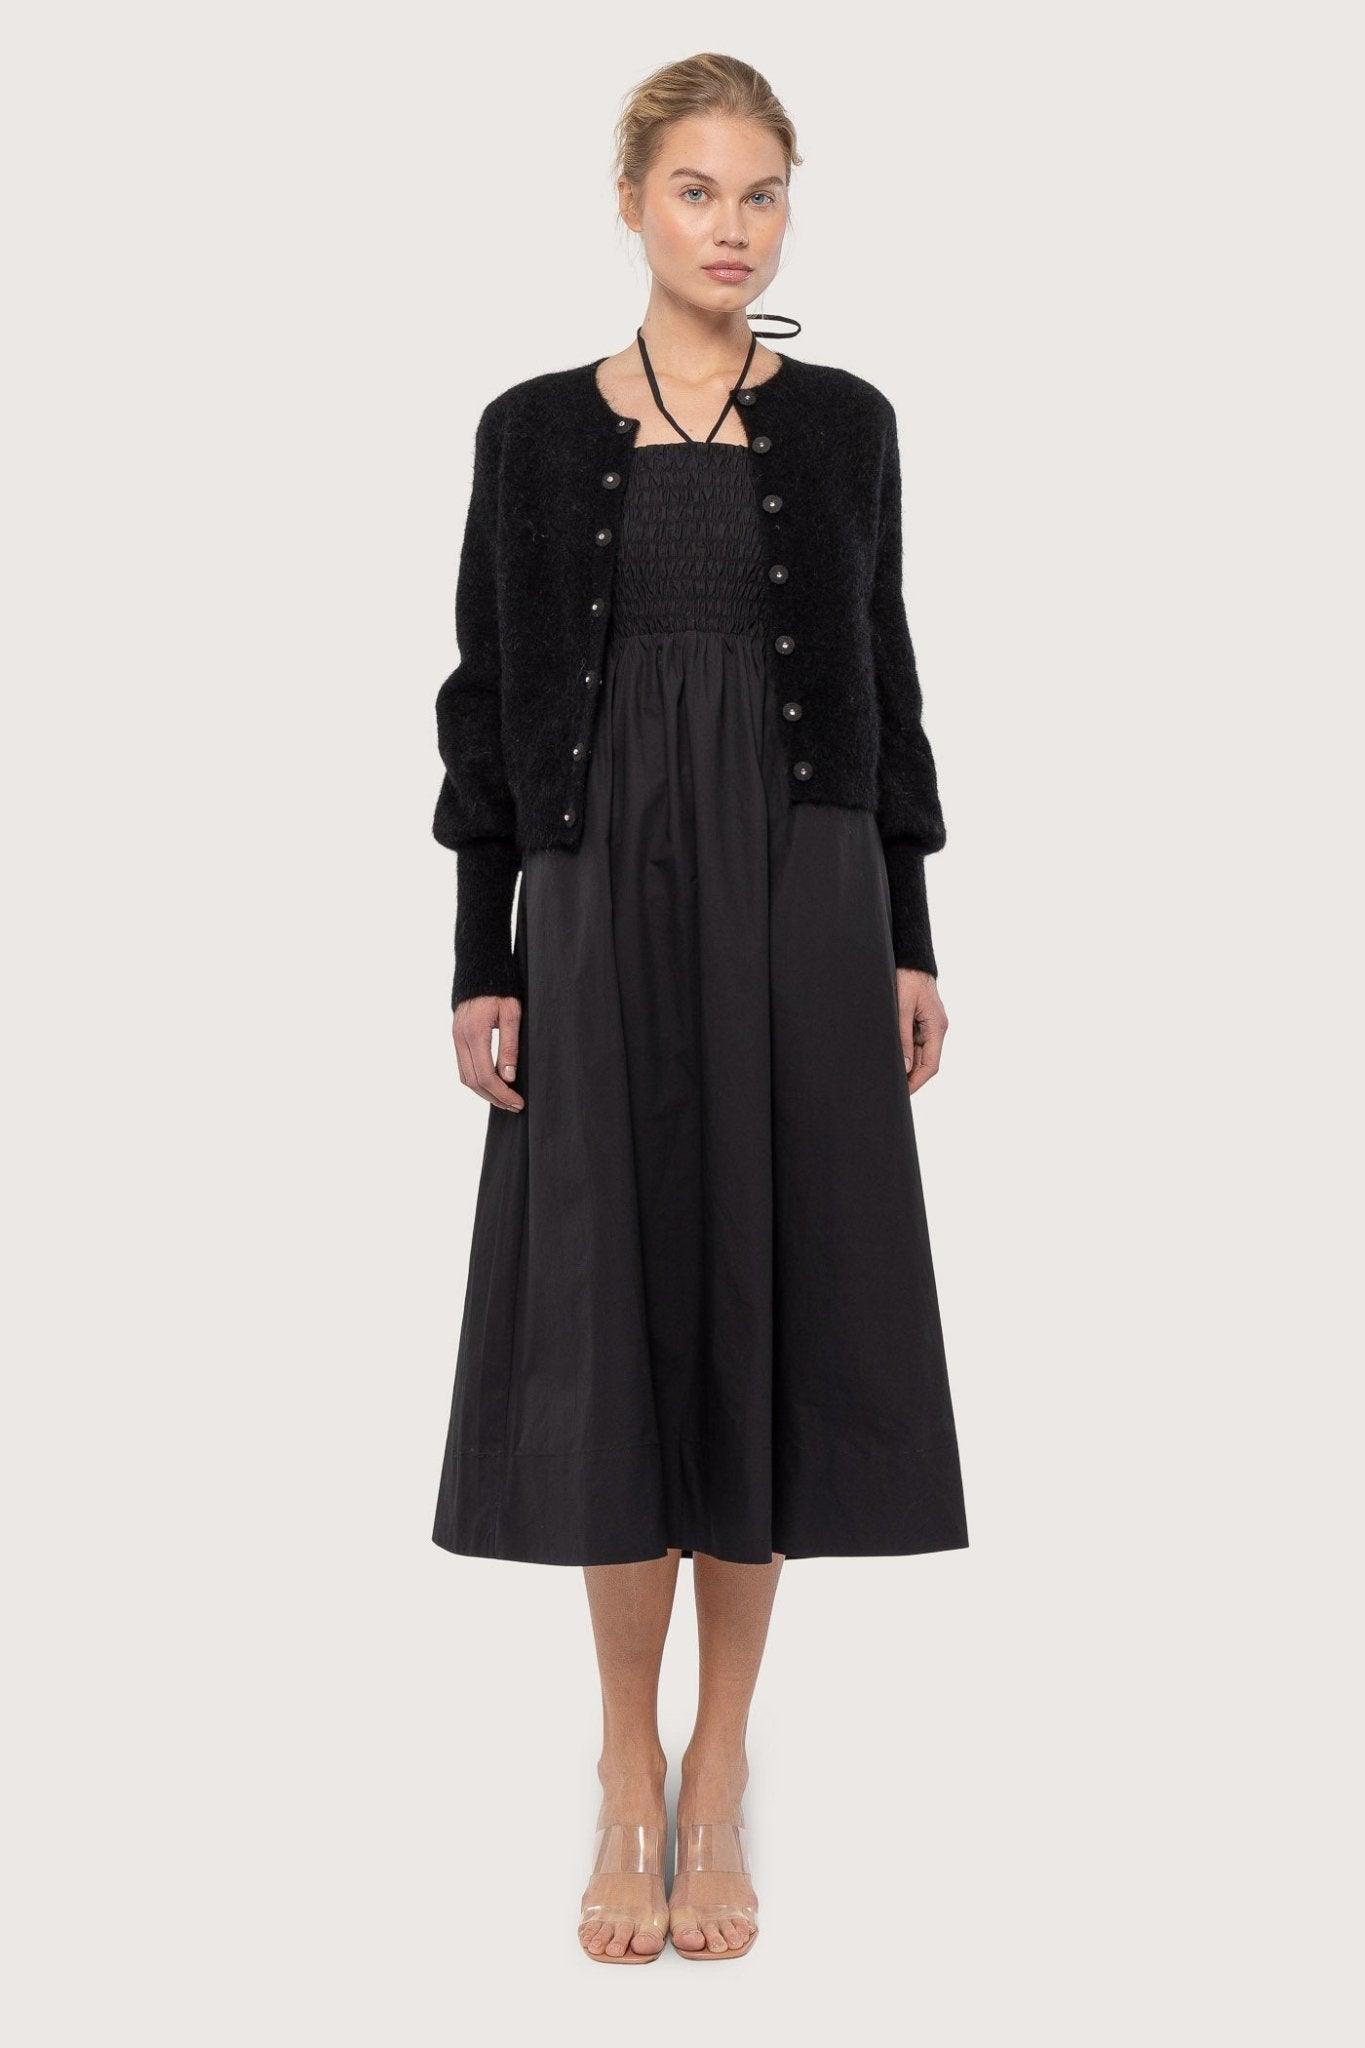 Cathrine Hammel - Poplin Smocked Dress Black - No22 Damplassen